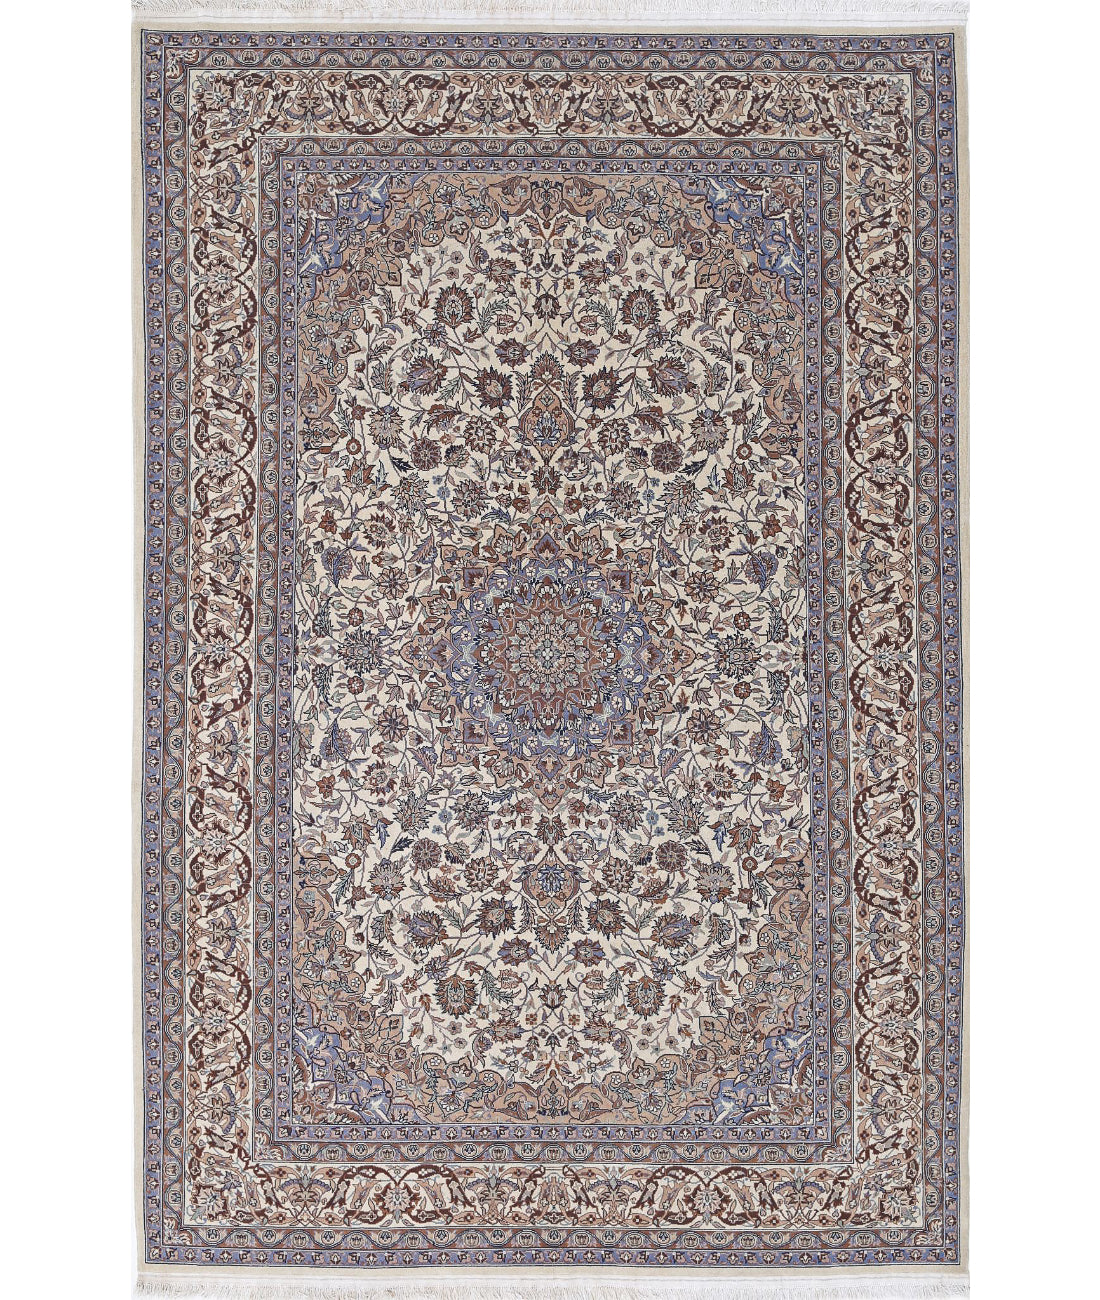 Heritage-hand-knotted-pak-persian-wool-rug-5025313.jpg